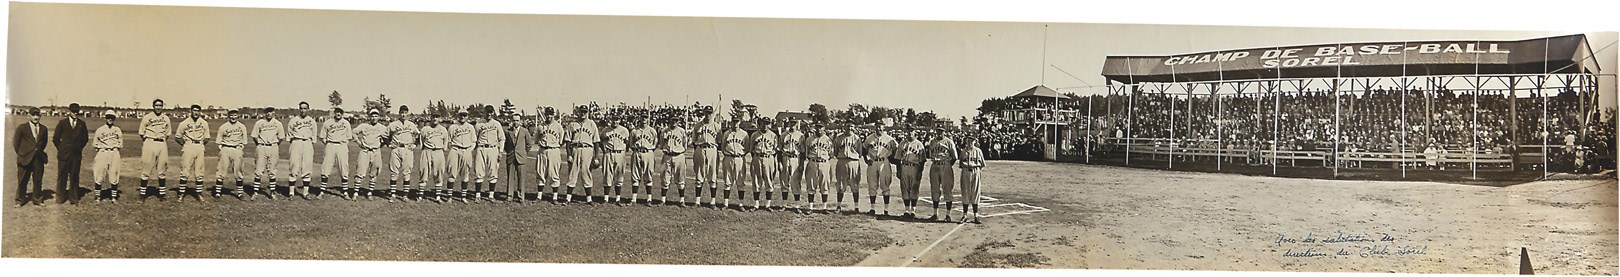 1930s Baseball Club of Sorel Team Panorama